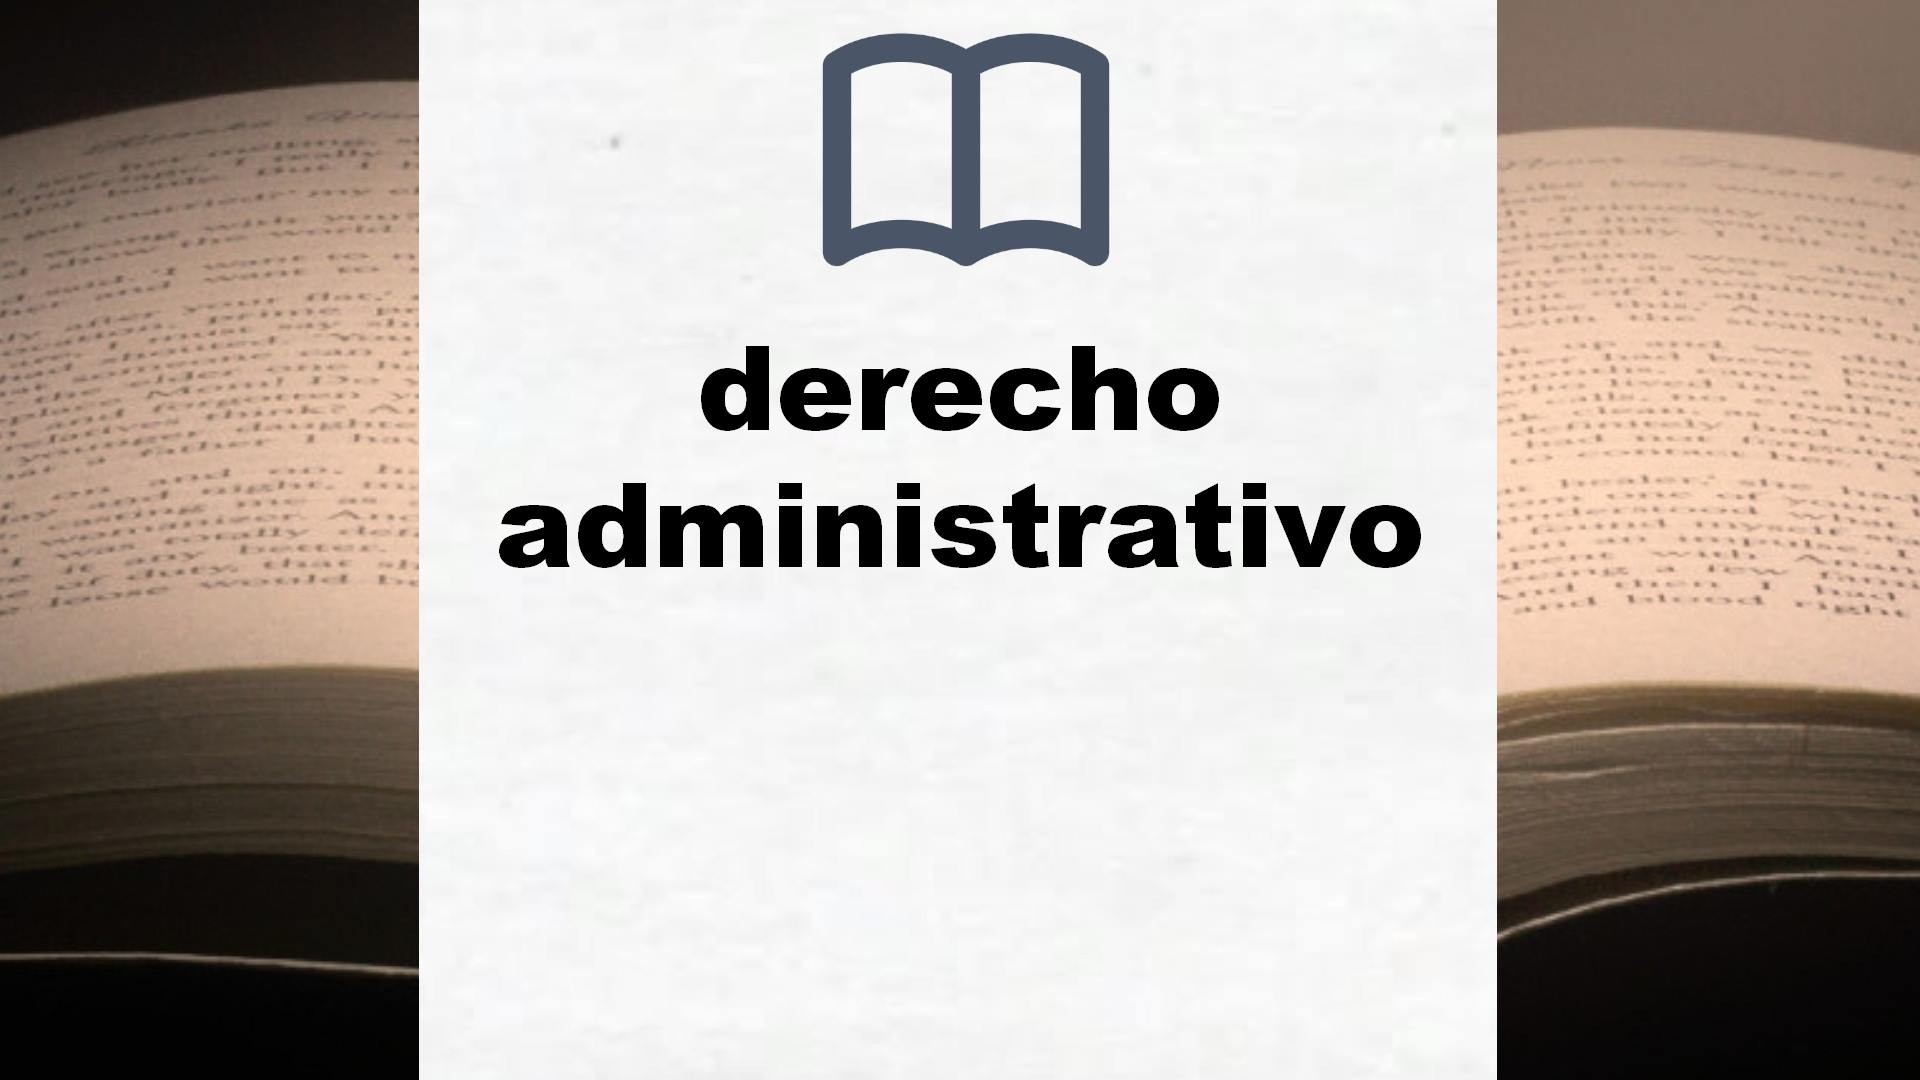 Libros sobre derecho administrativo